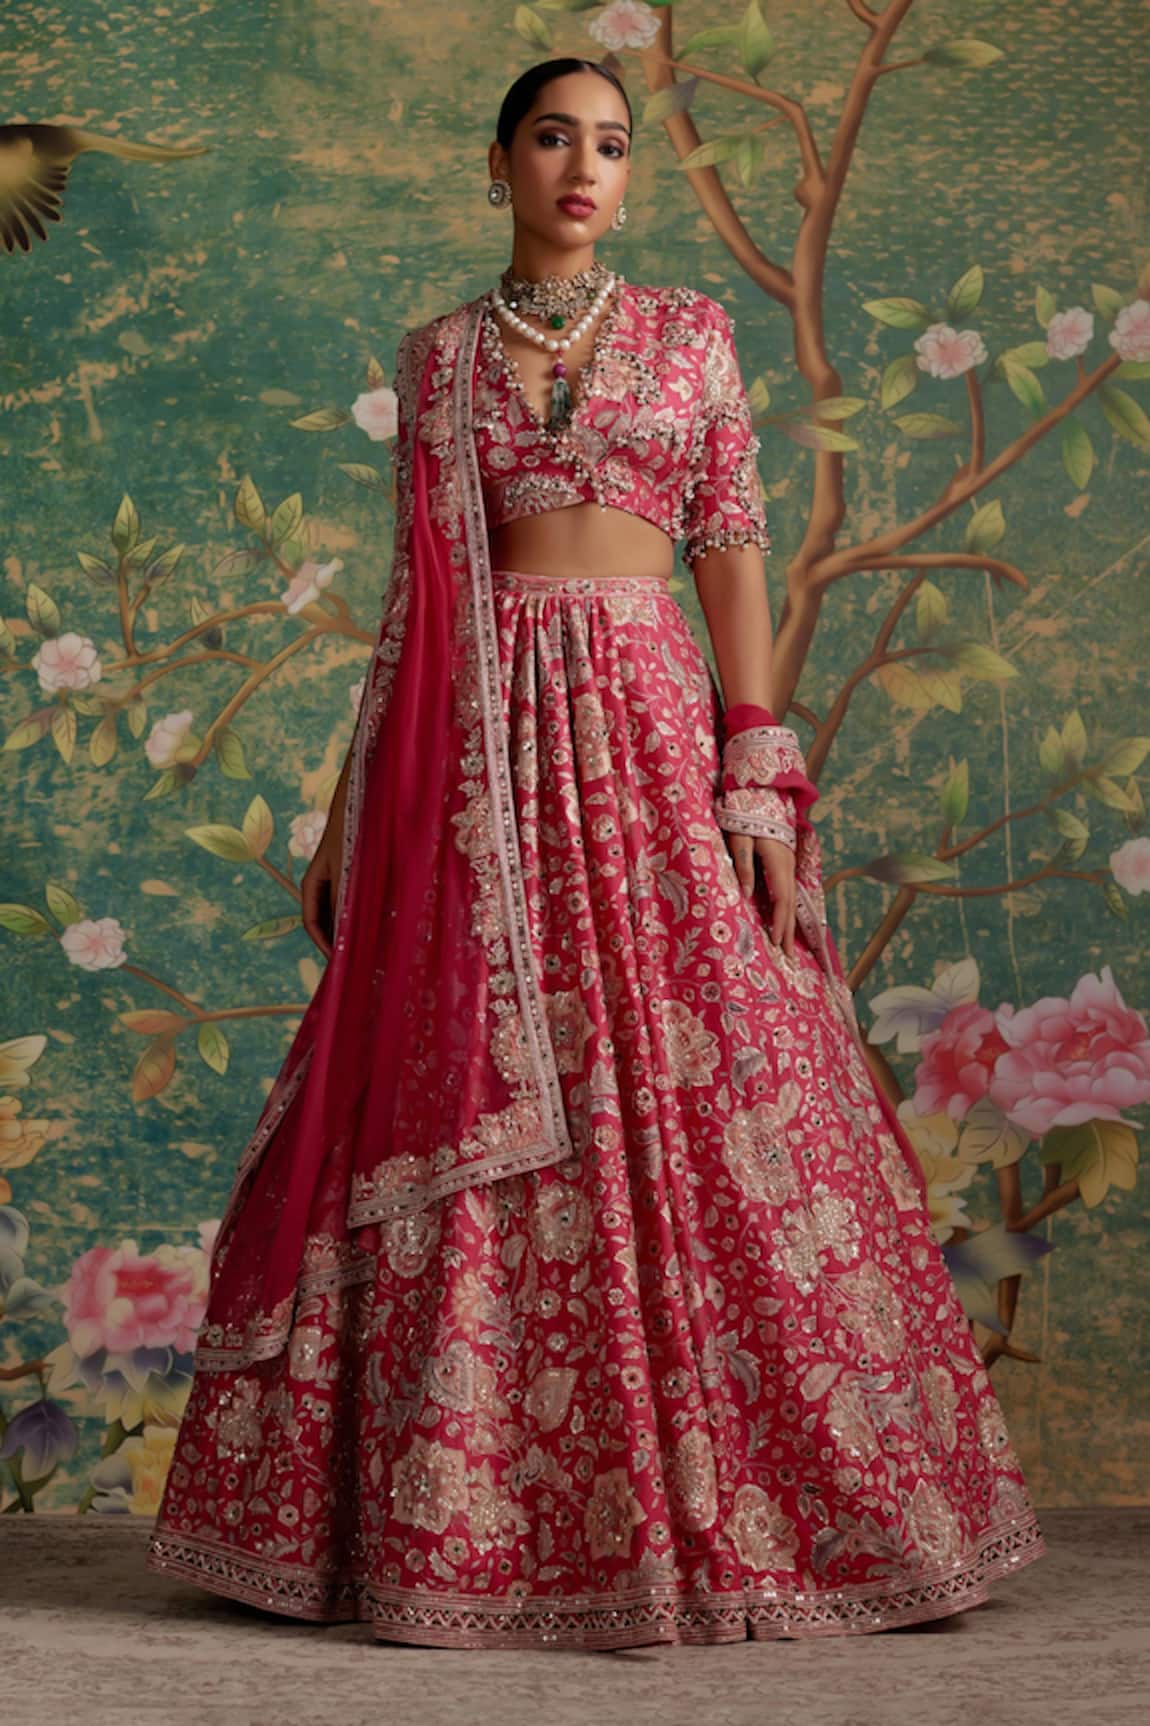 Ridhi Mehra Starlet Embroidered Blouse Bridal Lehenga Set